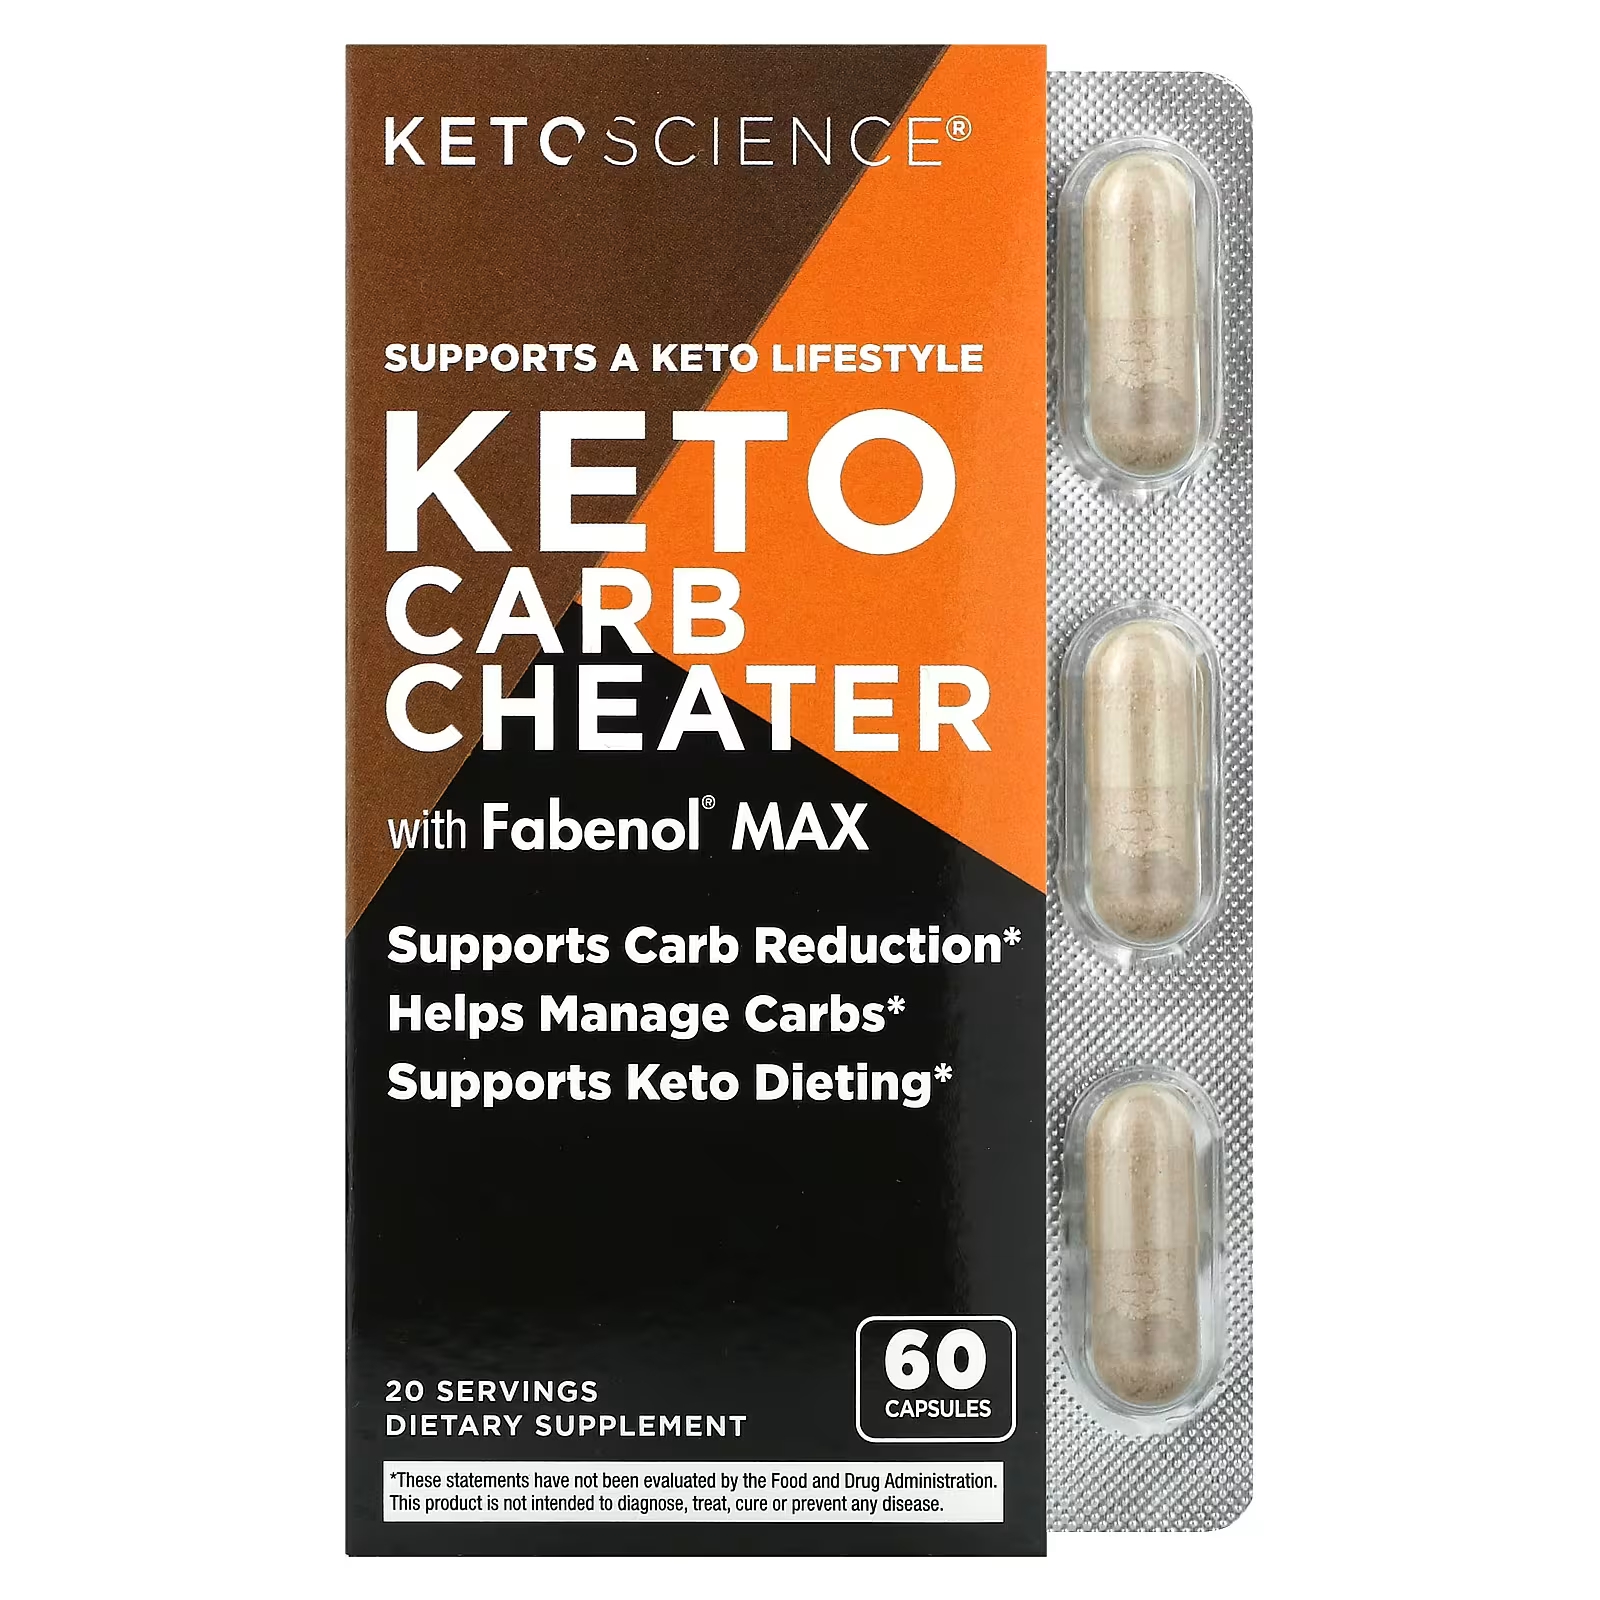 Пищевая добавка Keto Science Keto Carb Cheater & Fabenol Max, 60 капсул